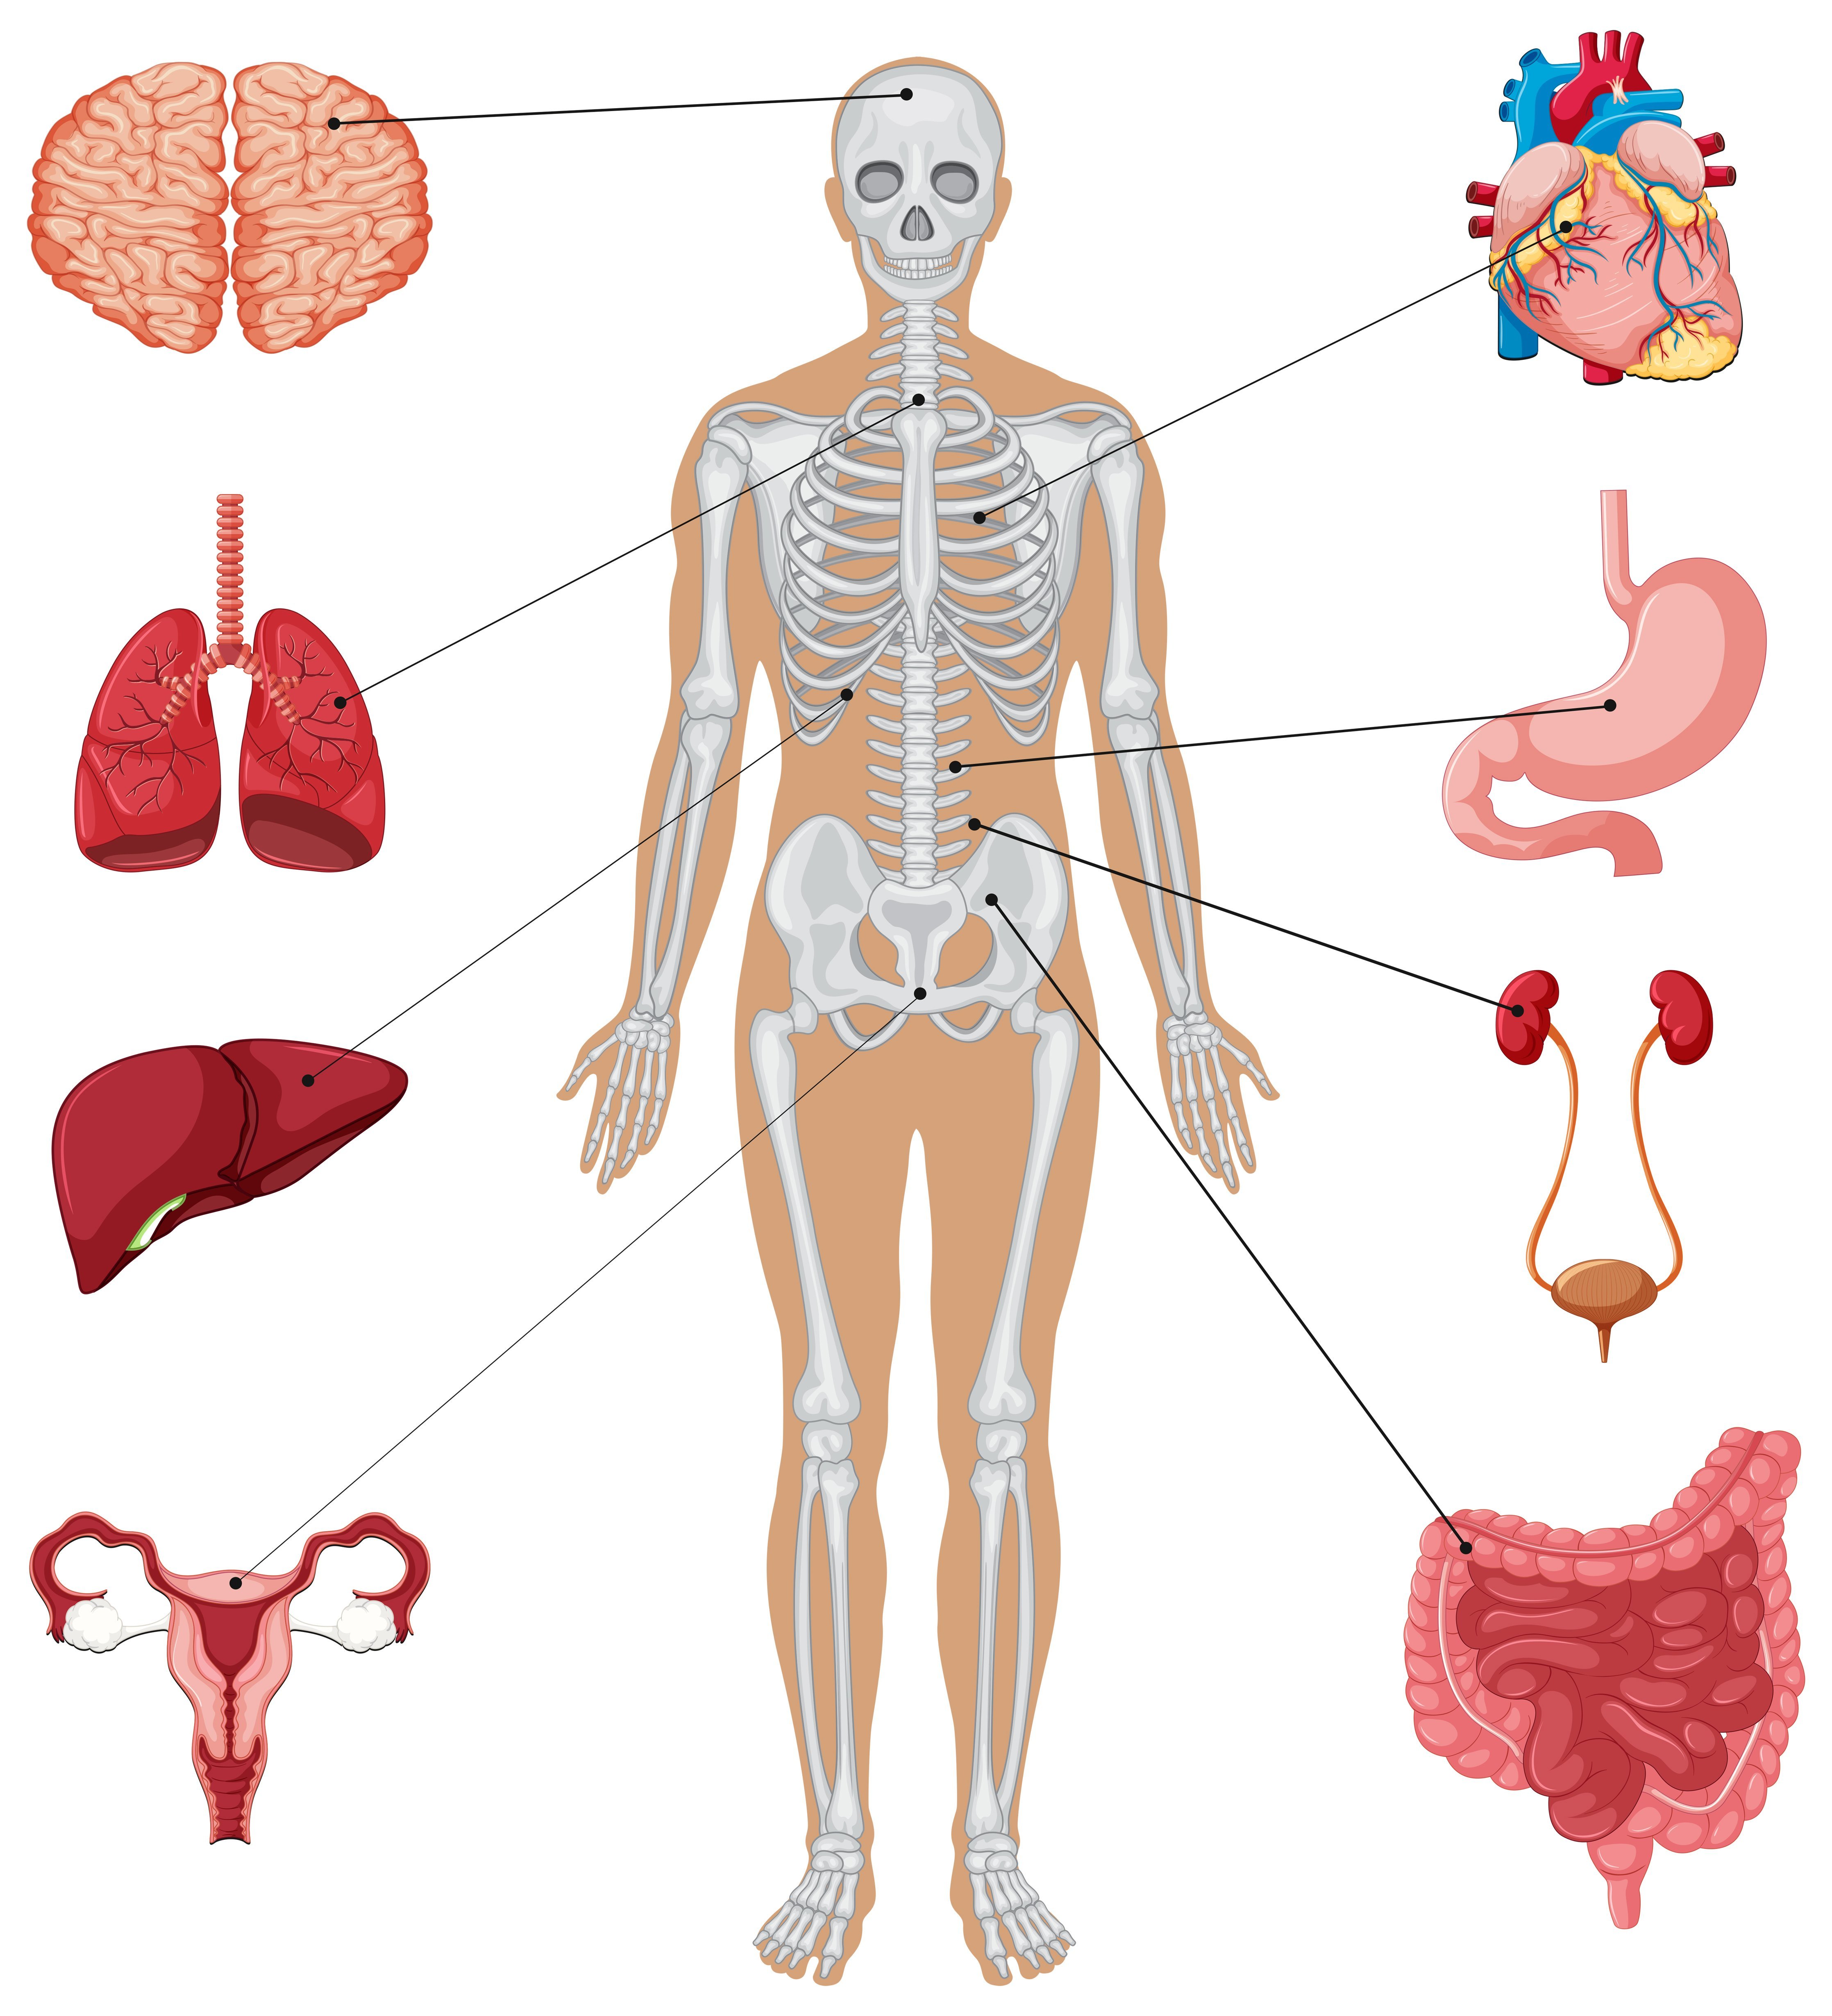 Органы на т. Макет человека с органами. Скелет человека с внутренними органами. Схема скелета человека с органами. Макет внутренних органов человека для детей.